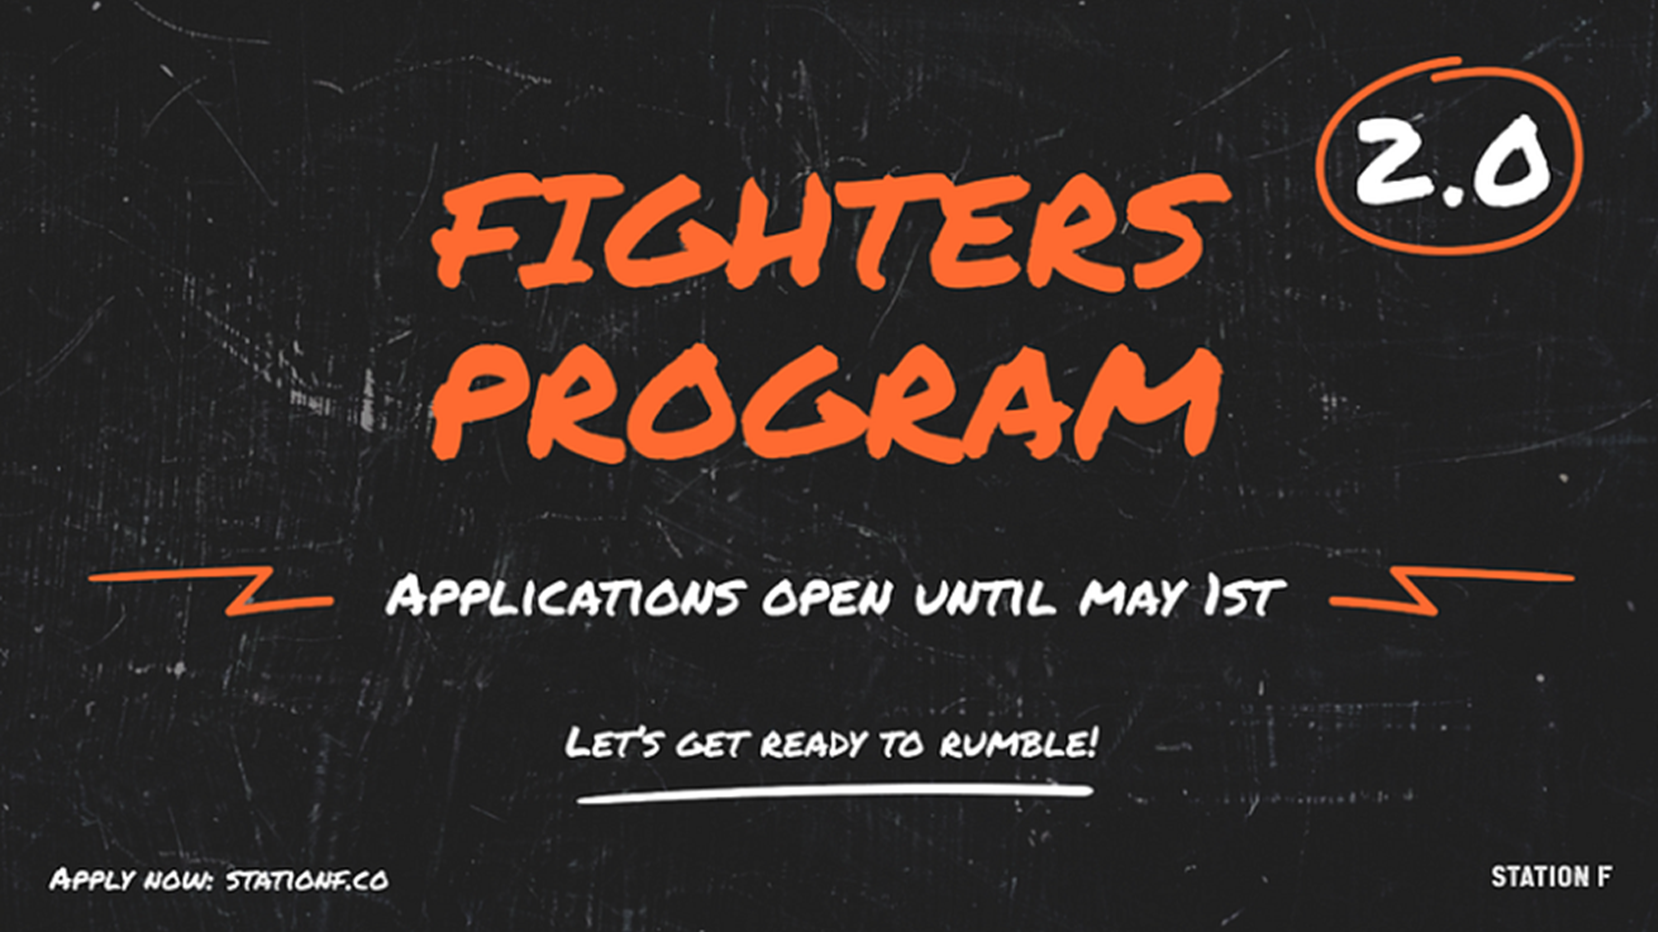 STATION F-Fighters Program 2.0